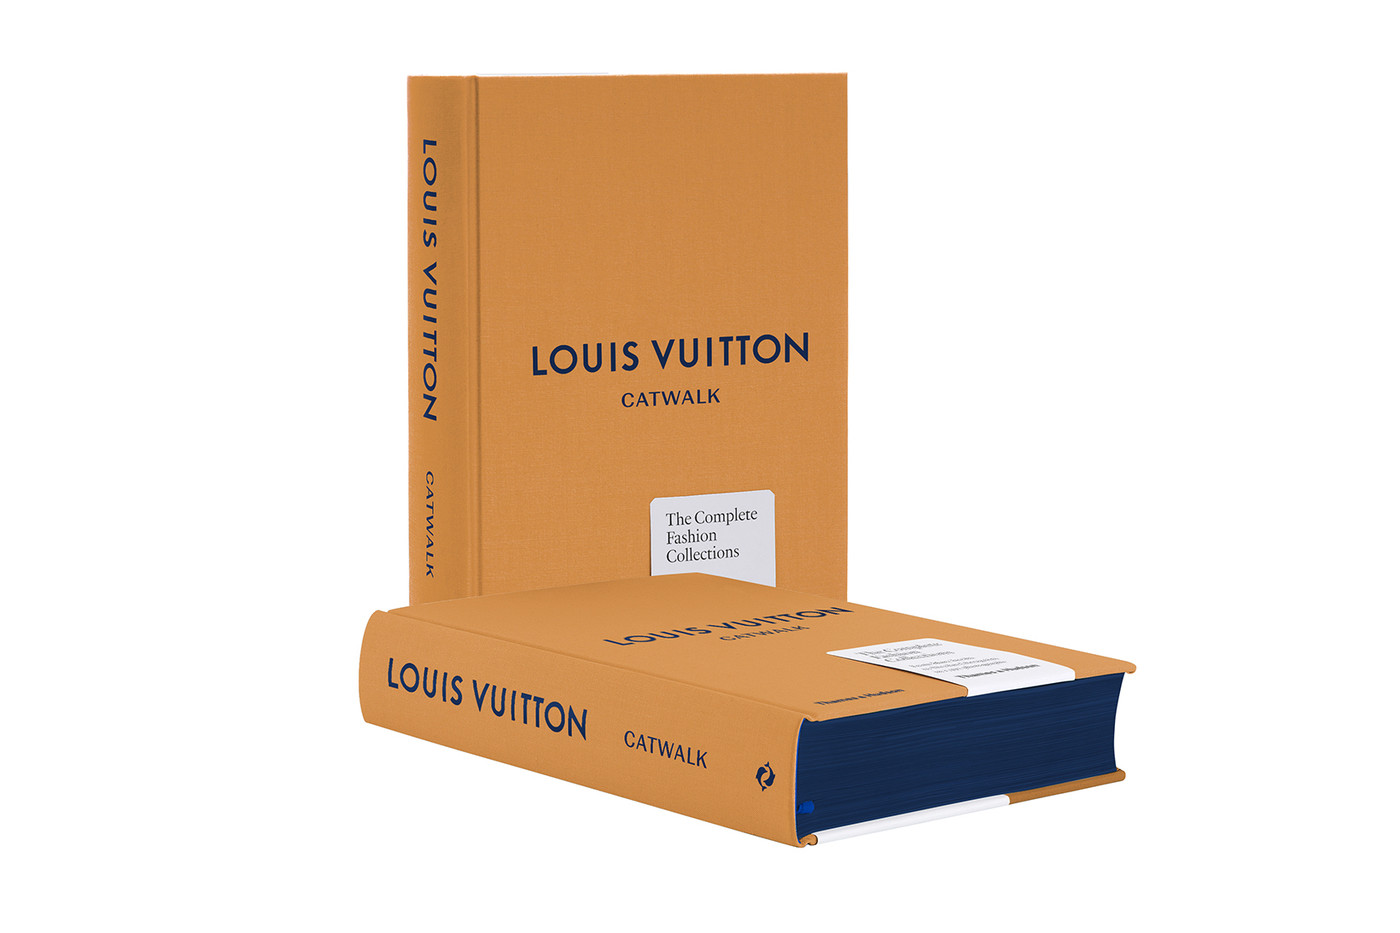 THAMES & HUDSON - Louis Vuitton Catwalk book